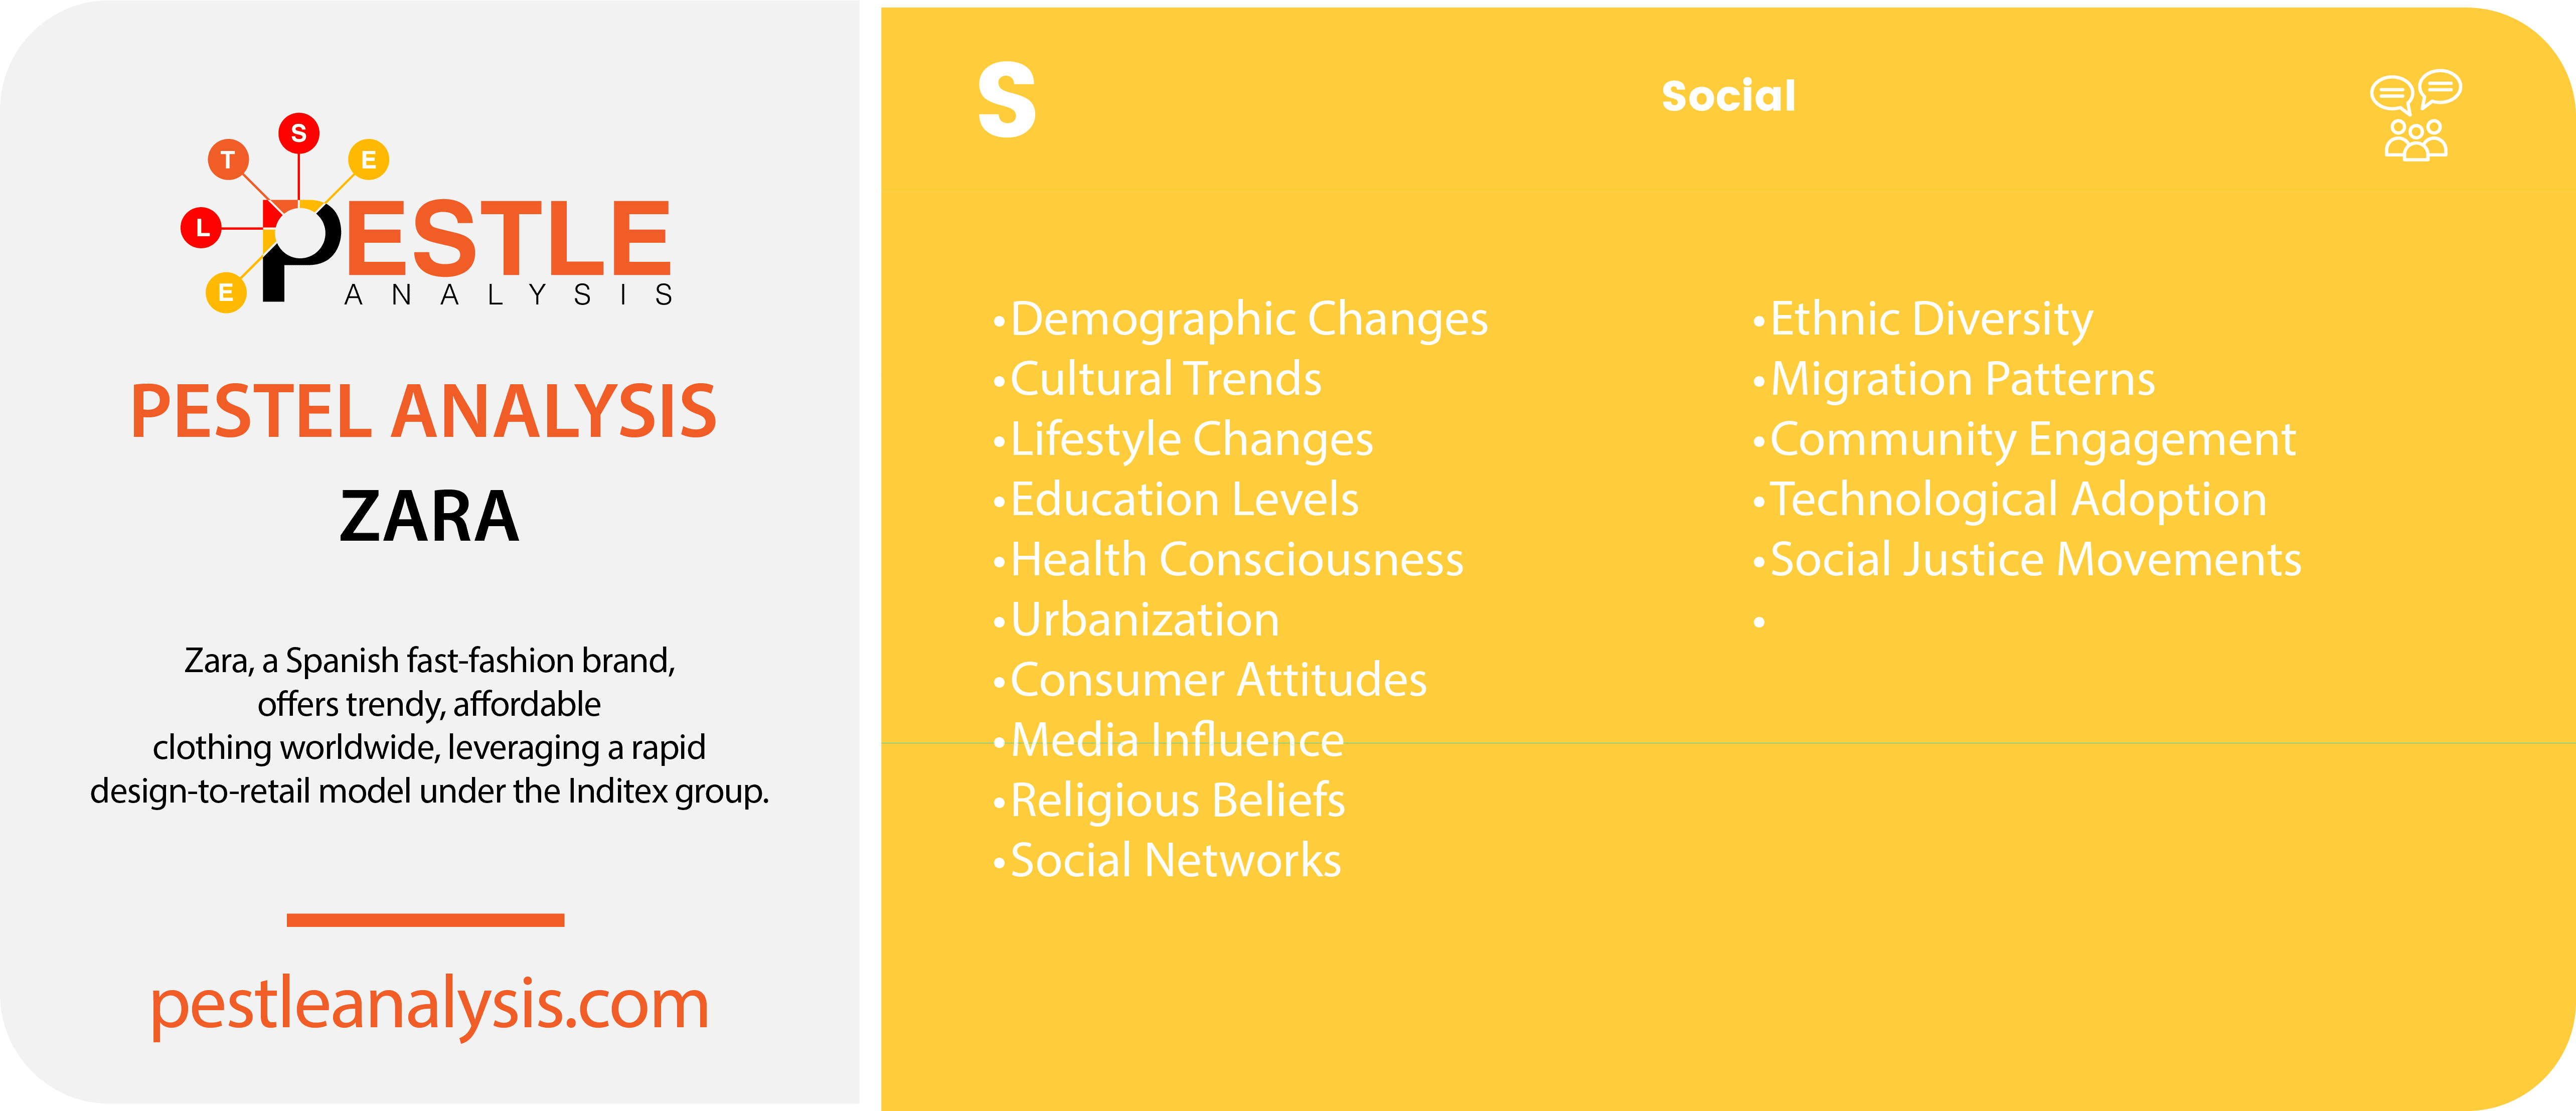 zara-pestle-analysis-social-factors-template